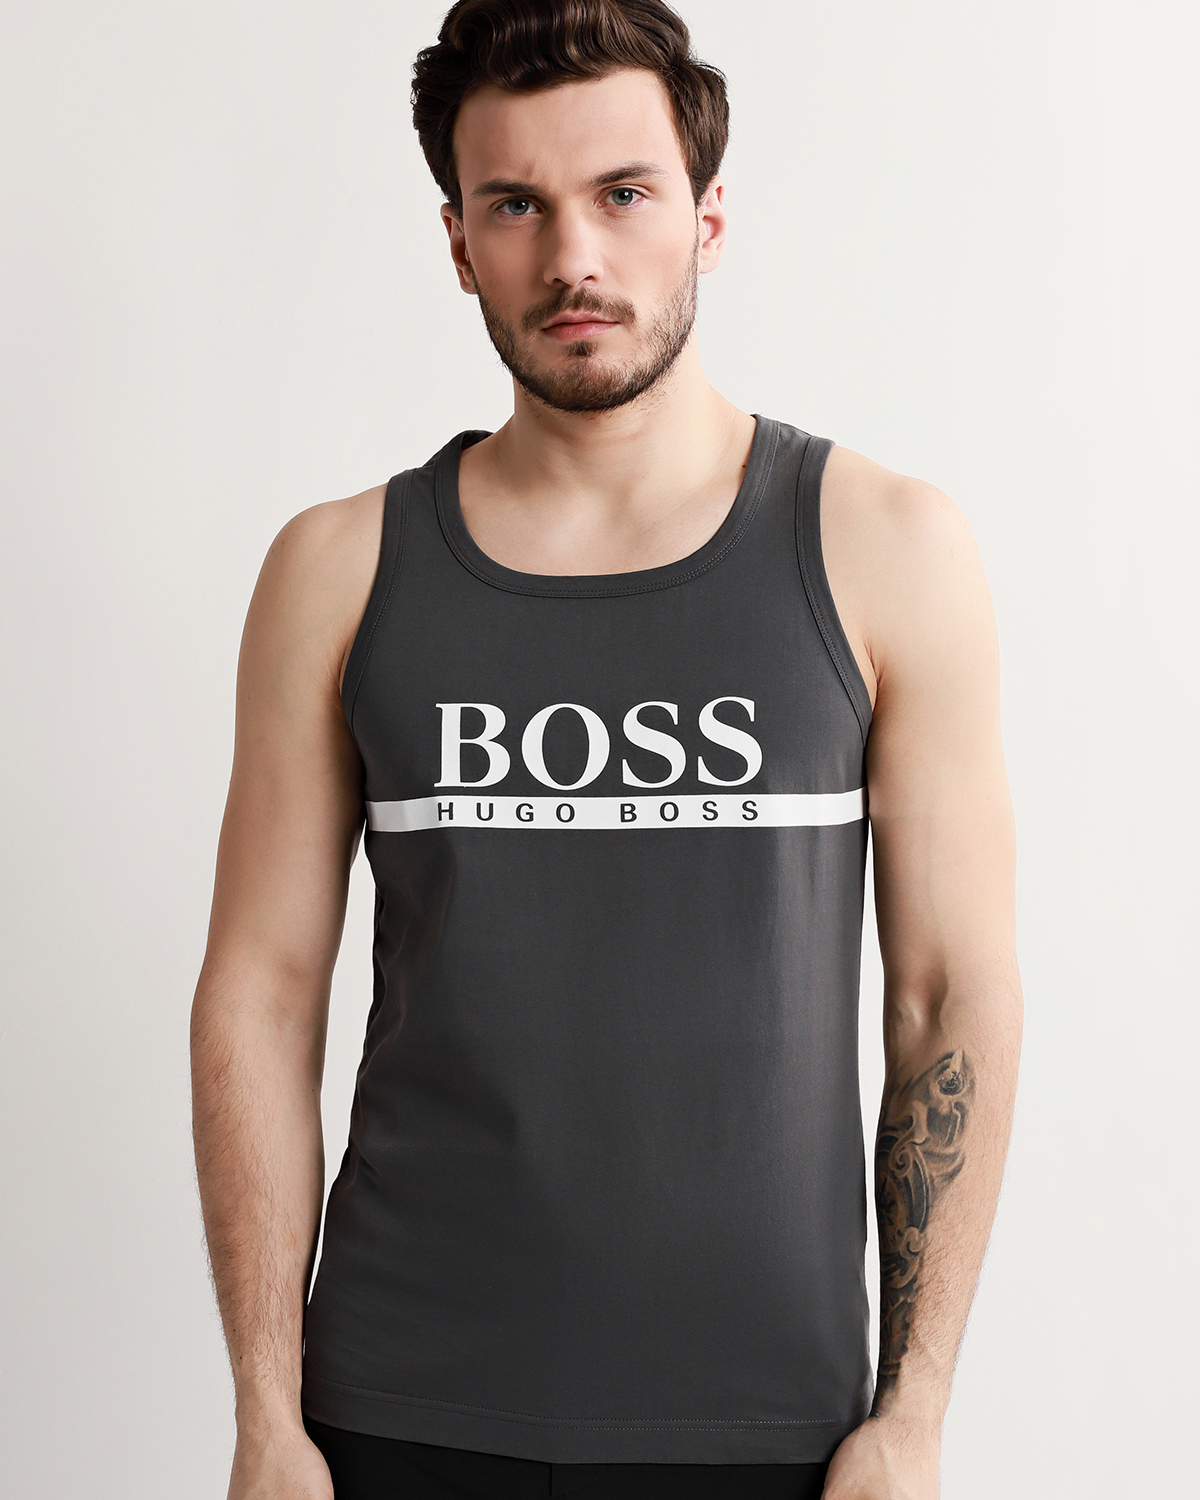 Футболки хуго босс. Майка Boss Hugo Boss. Футболка Boss Hugo Boss. Футболка Hugo Boss 2022. Майки Хуго босс мужские.